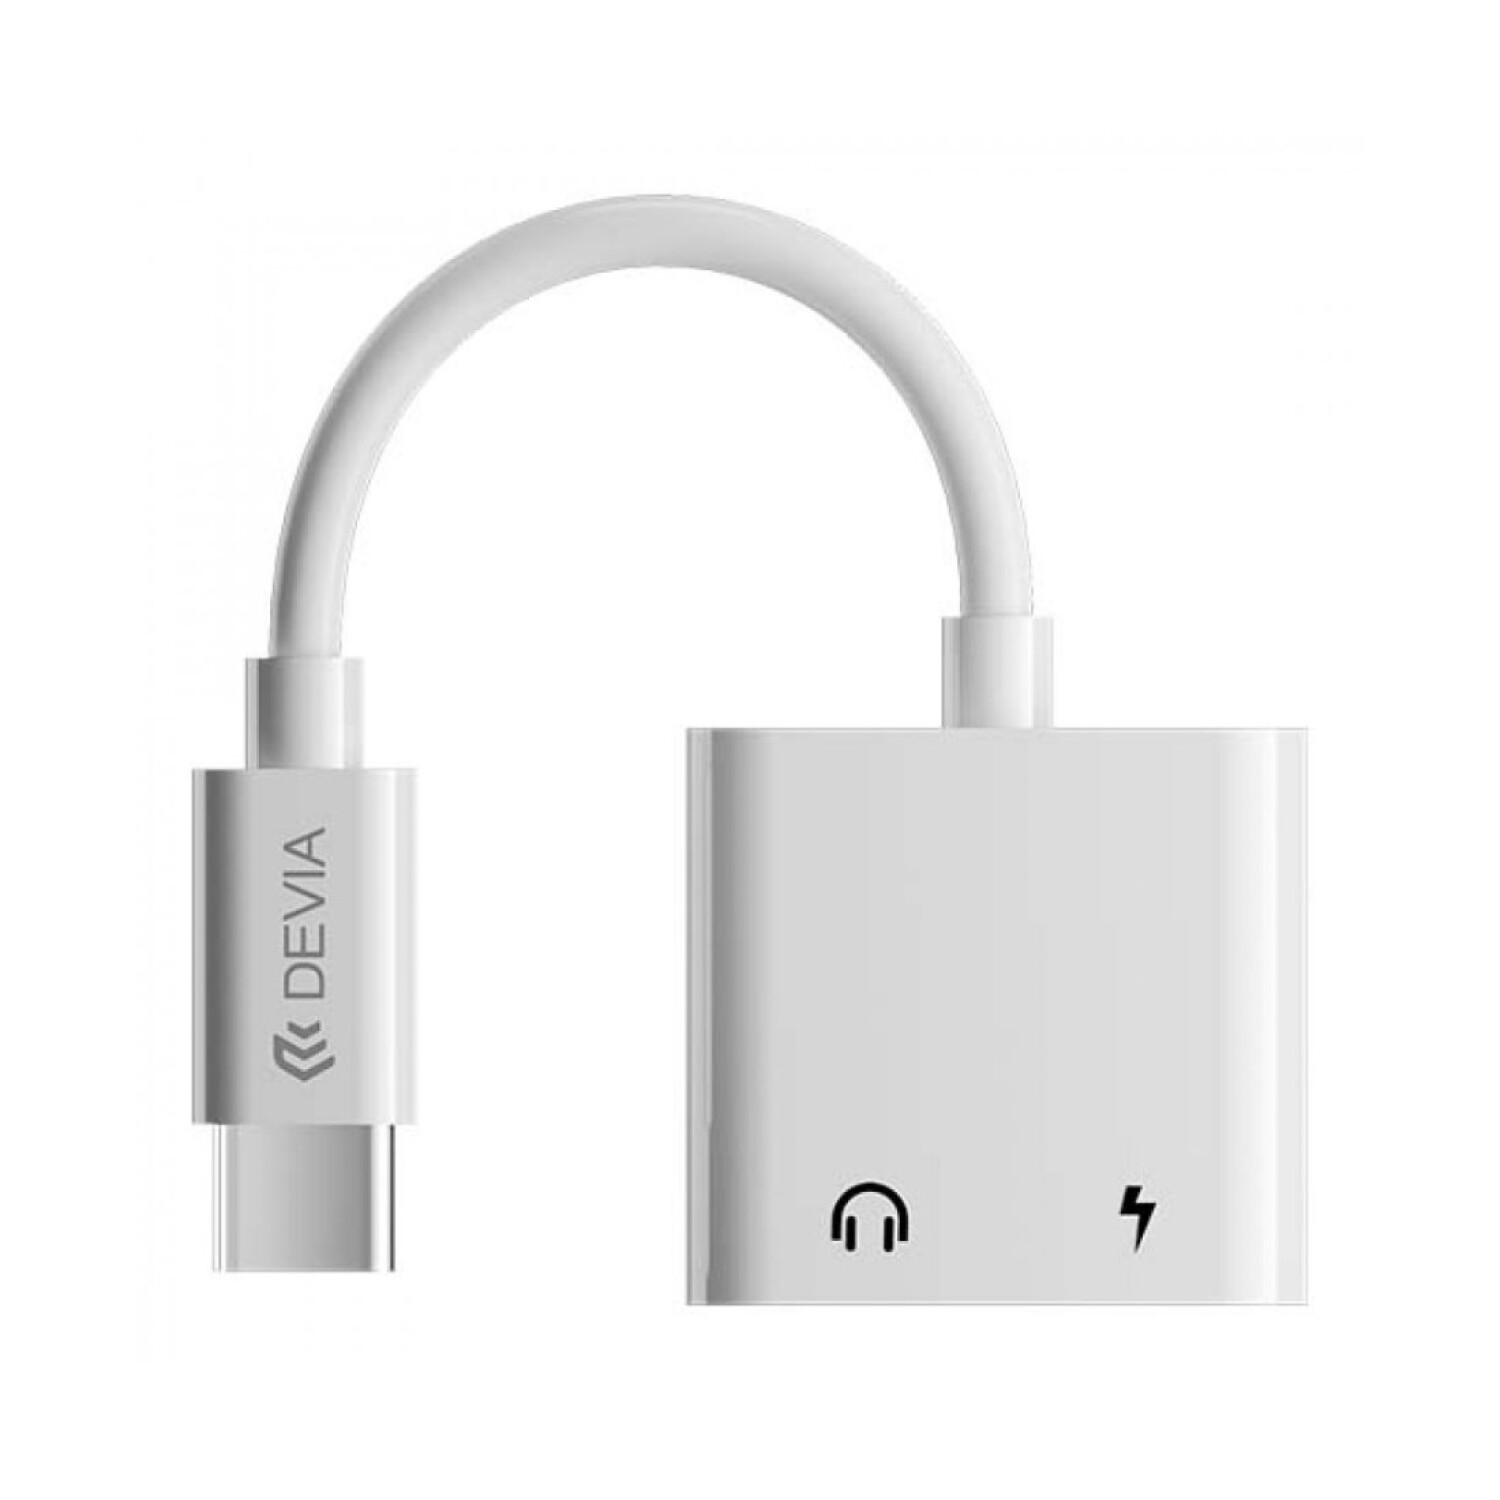 Adaptador de auriculares USB tipo C a Jack 3,5, convertidor de